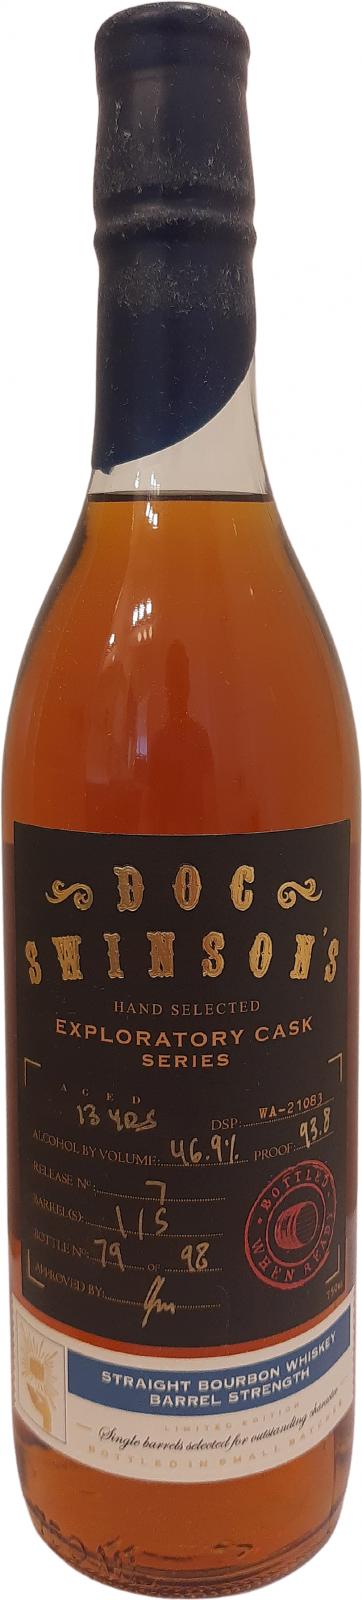 doc swinson bourbon